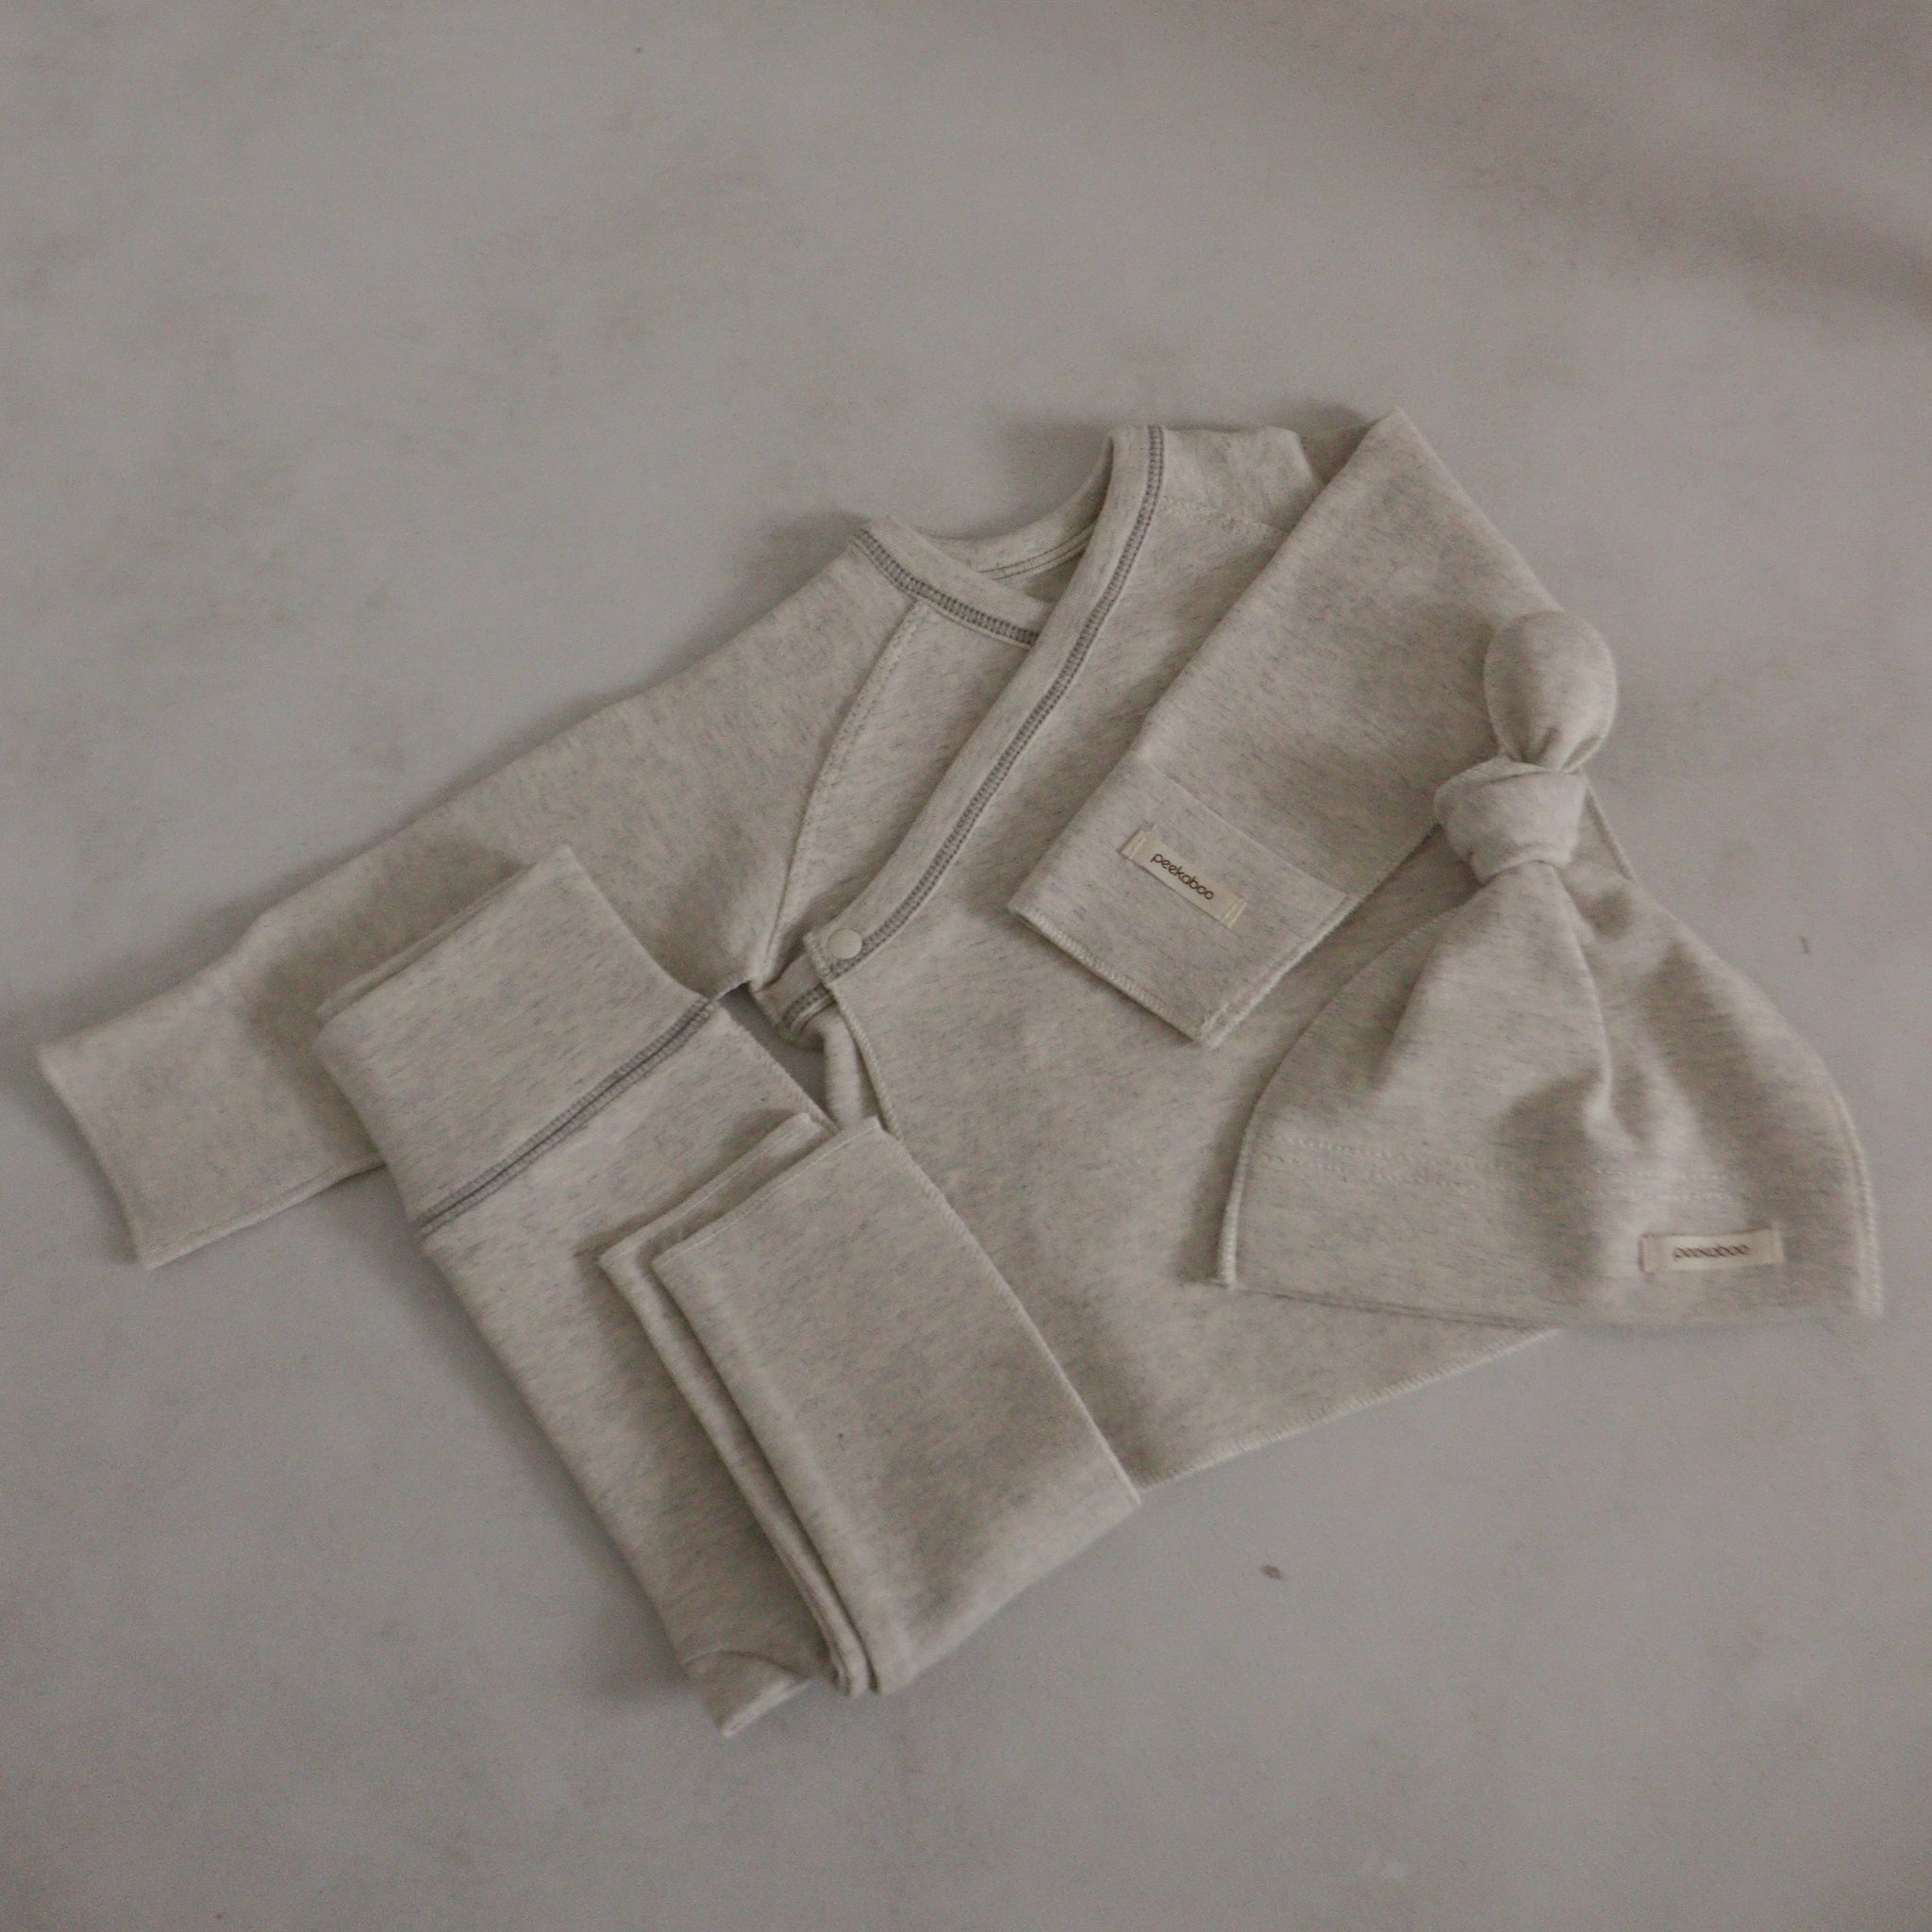 Newborn 3 Piece Cotton Set (0-3m) - Light Heather Grey - AT NOON STORE